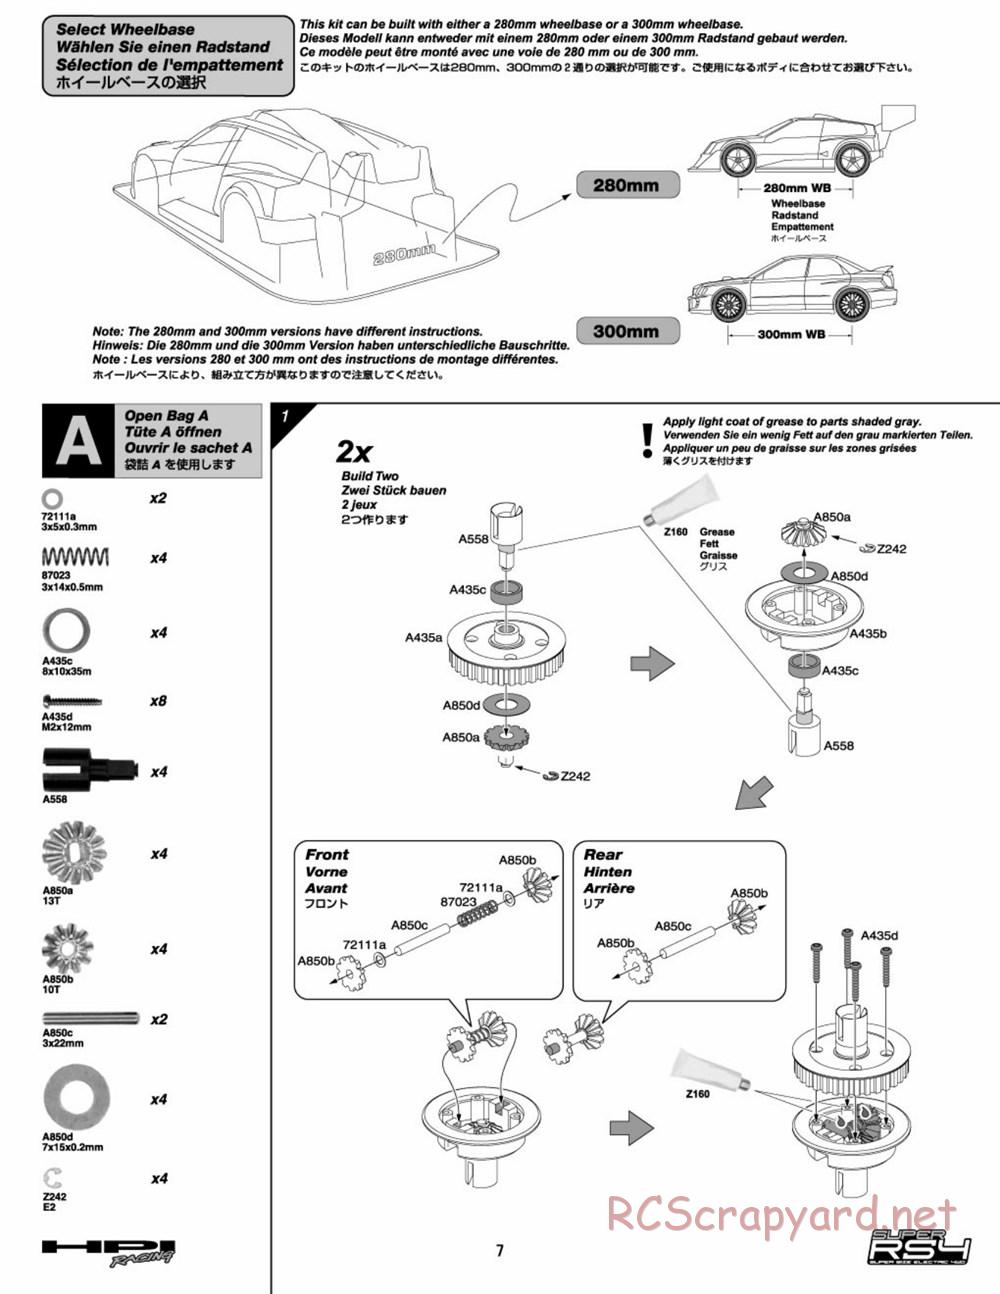 HPI - Super RS4 - Manual - Page 6